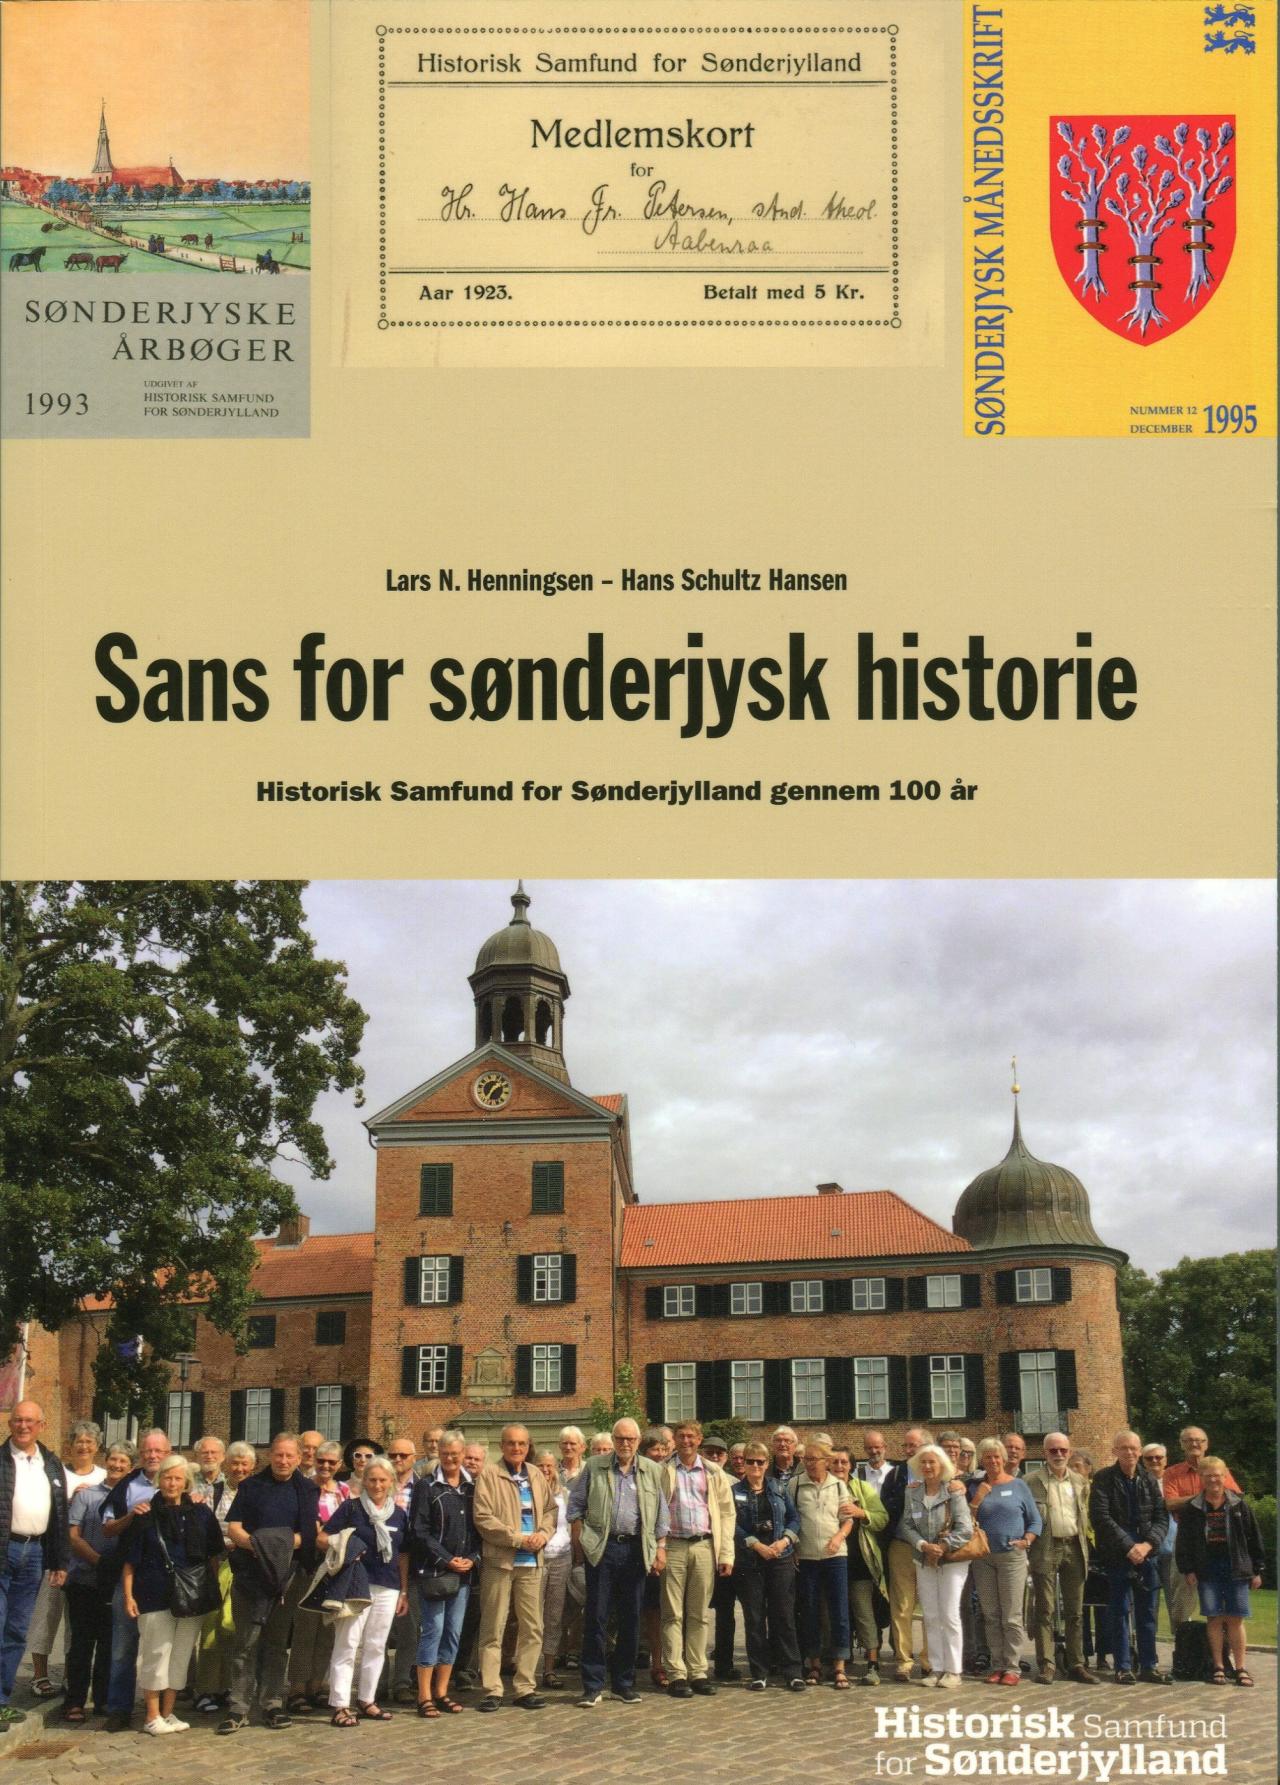 Sans for sønderjysk historie - Historisk Samfund for Sønderjylland gennem 100 år